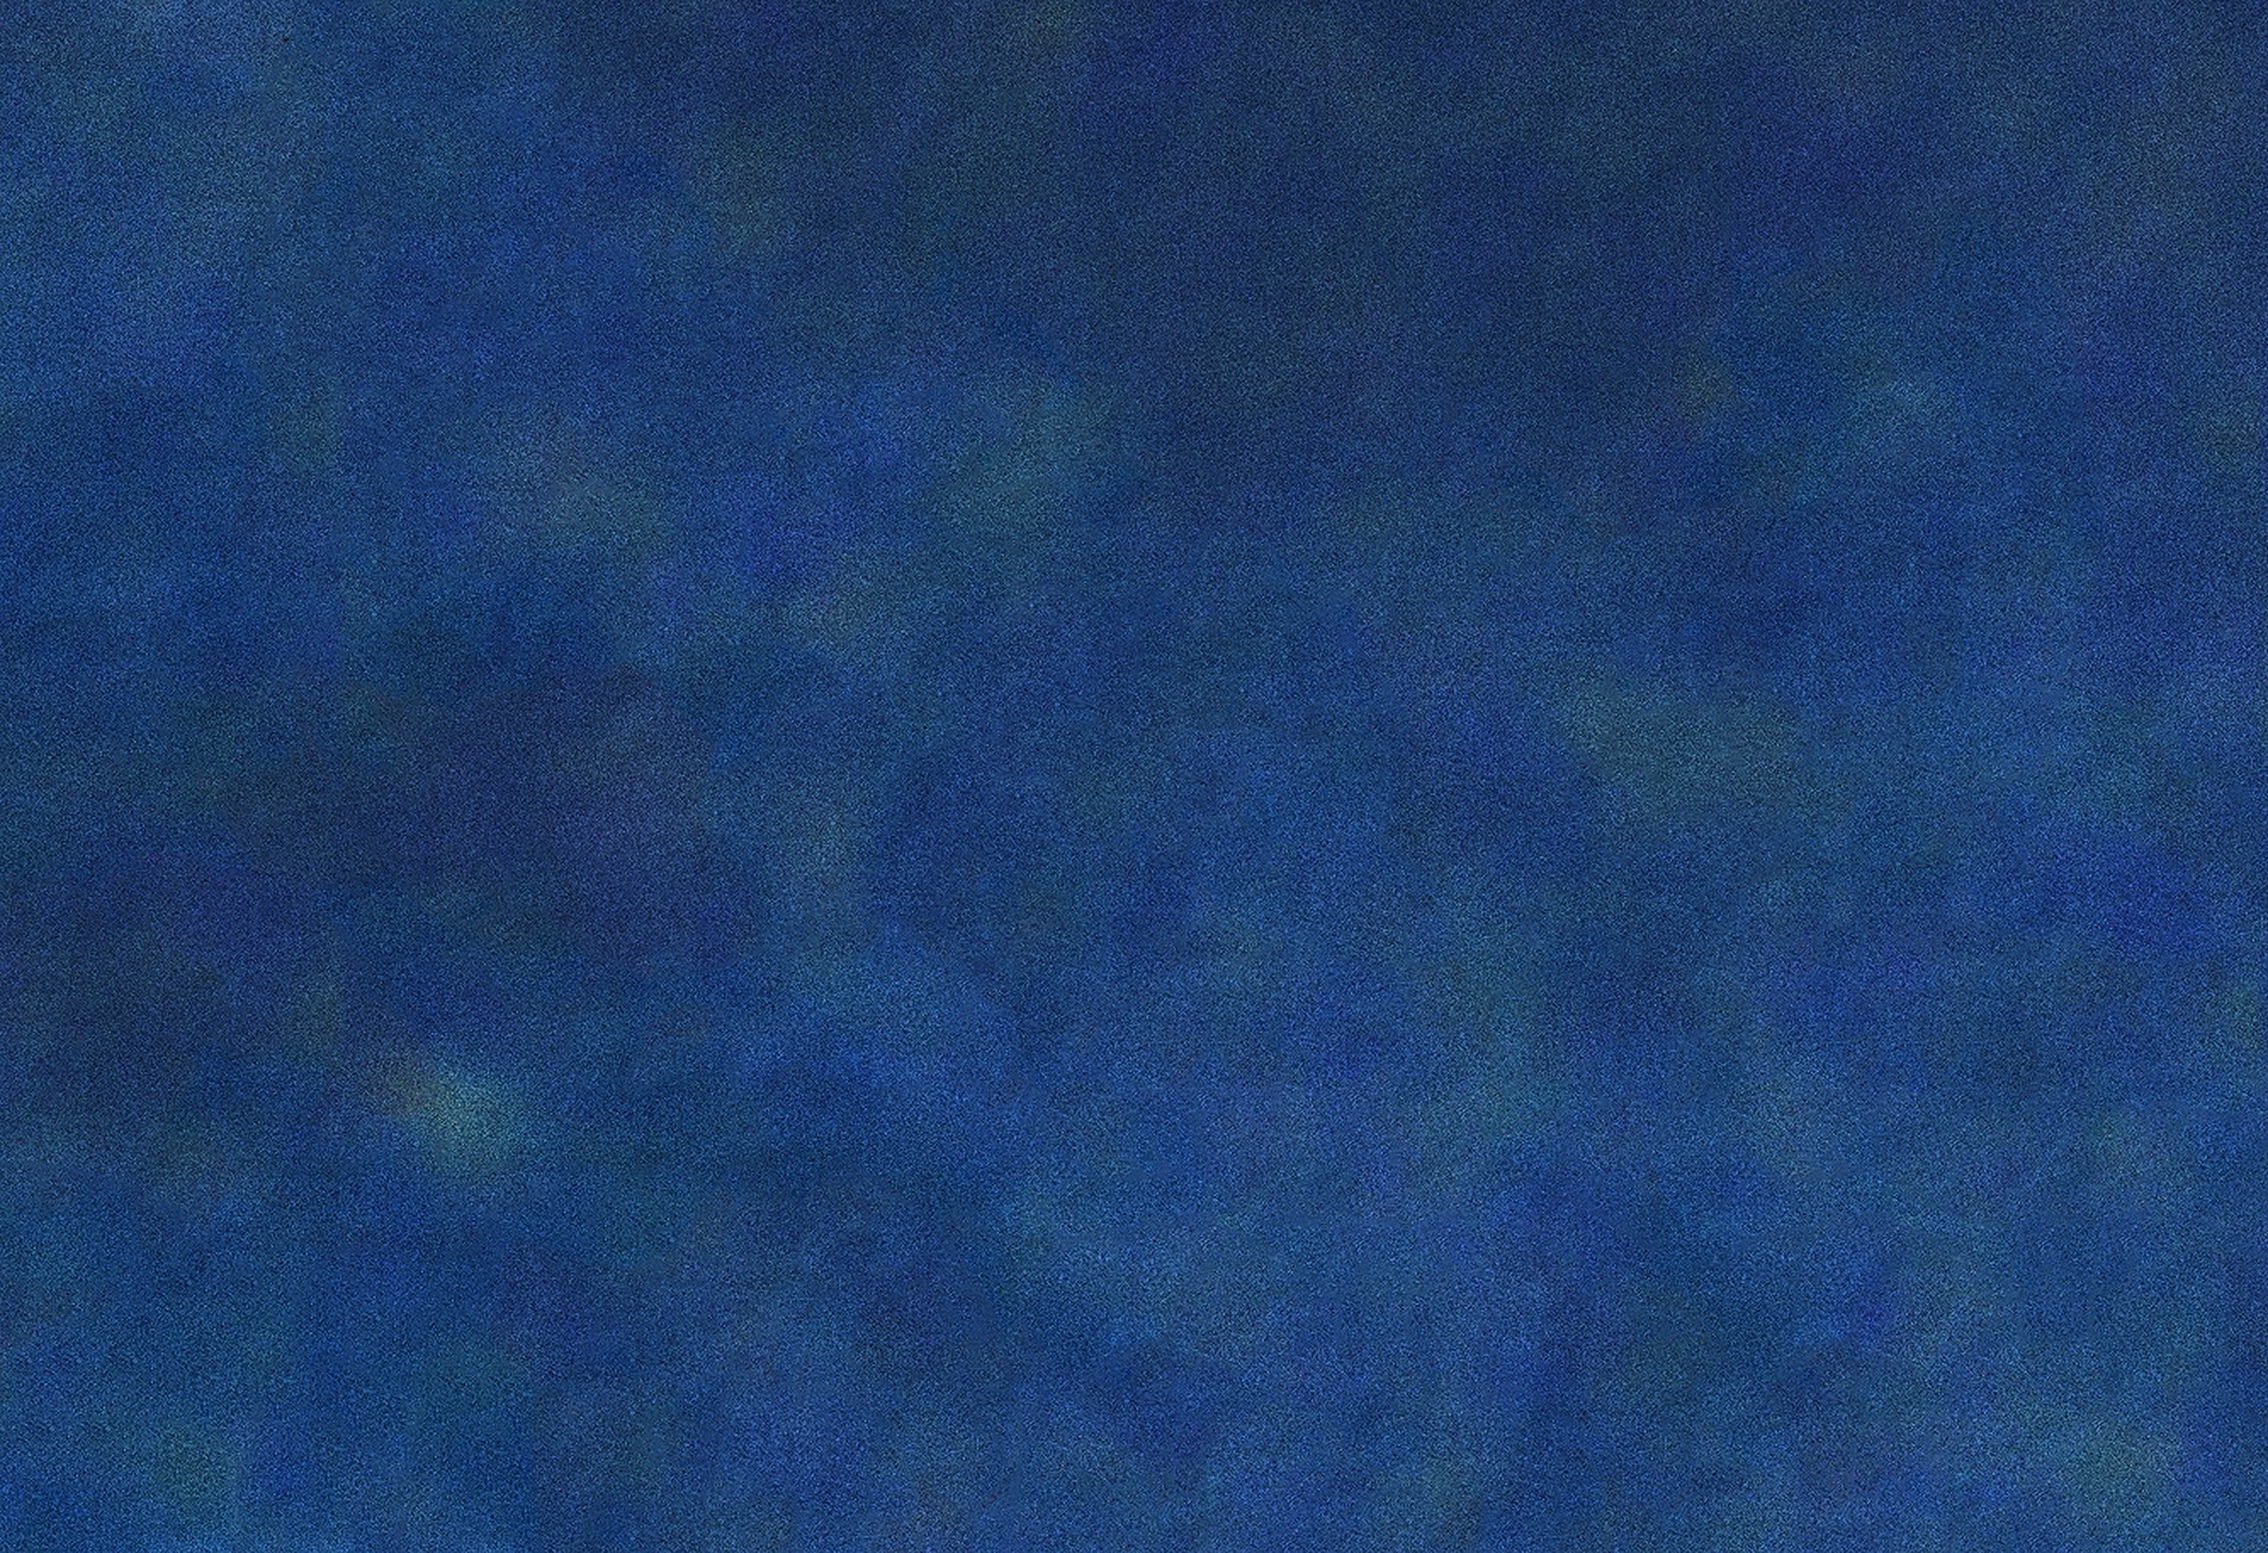 Background of dark blue sky free image download